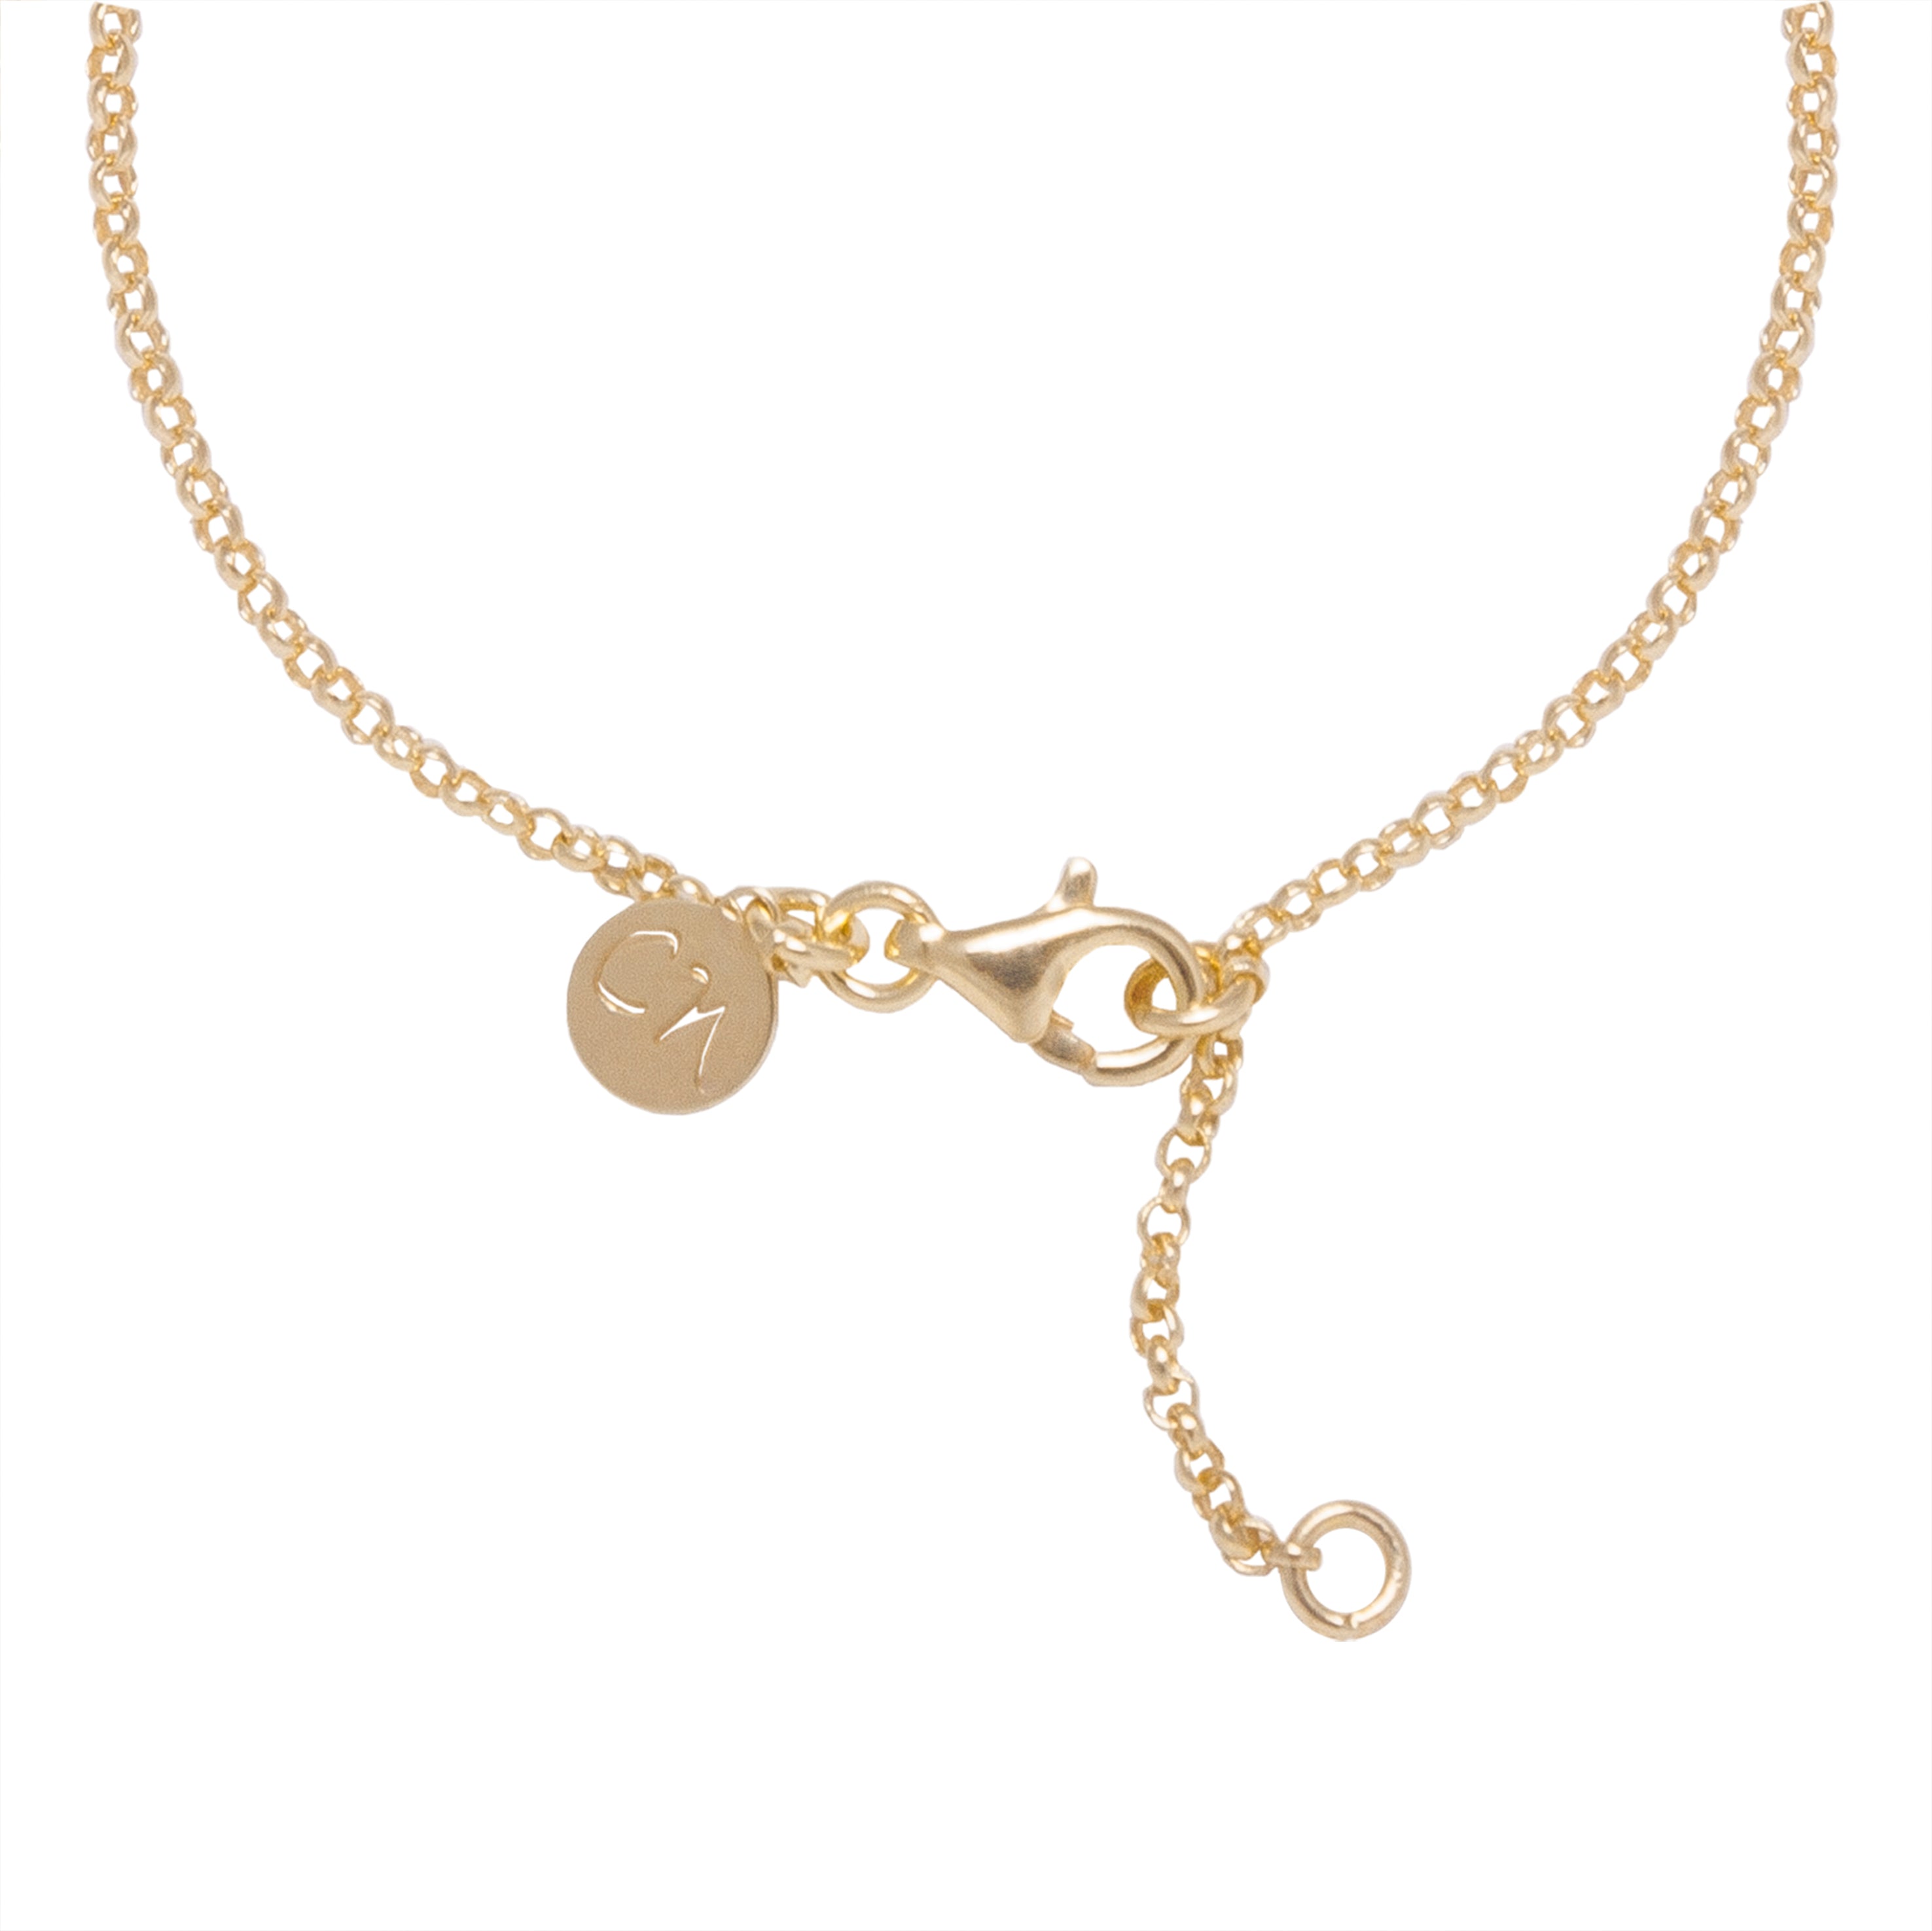 Claudia Navarro Jewelry- Bracelet Mandala / Gold